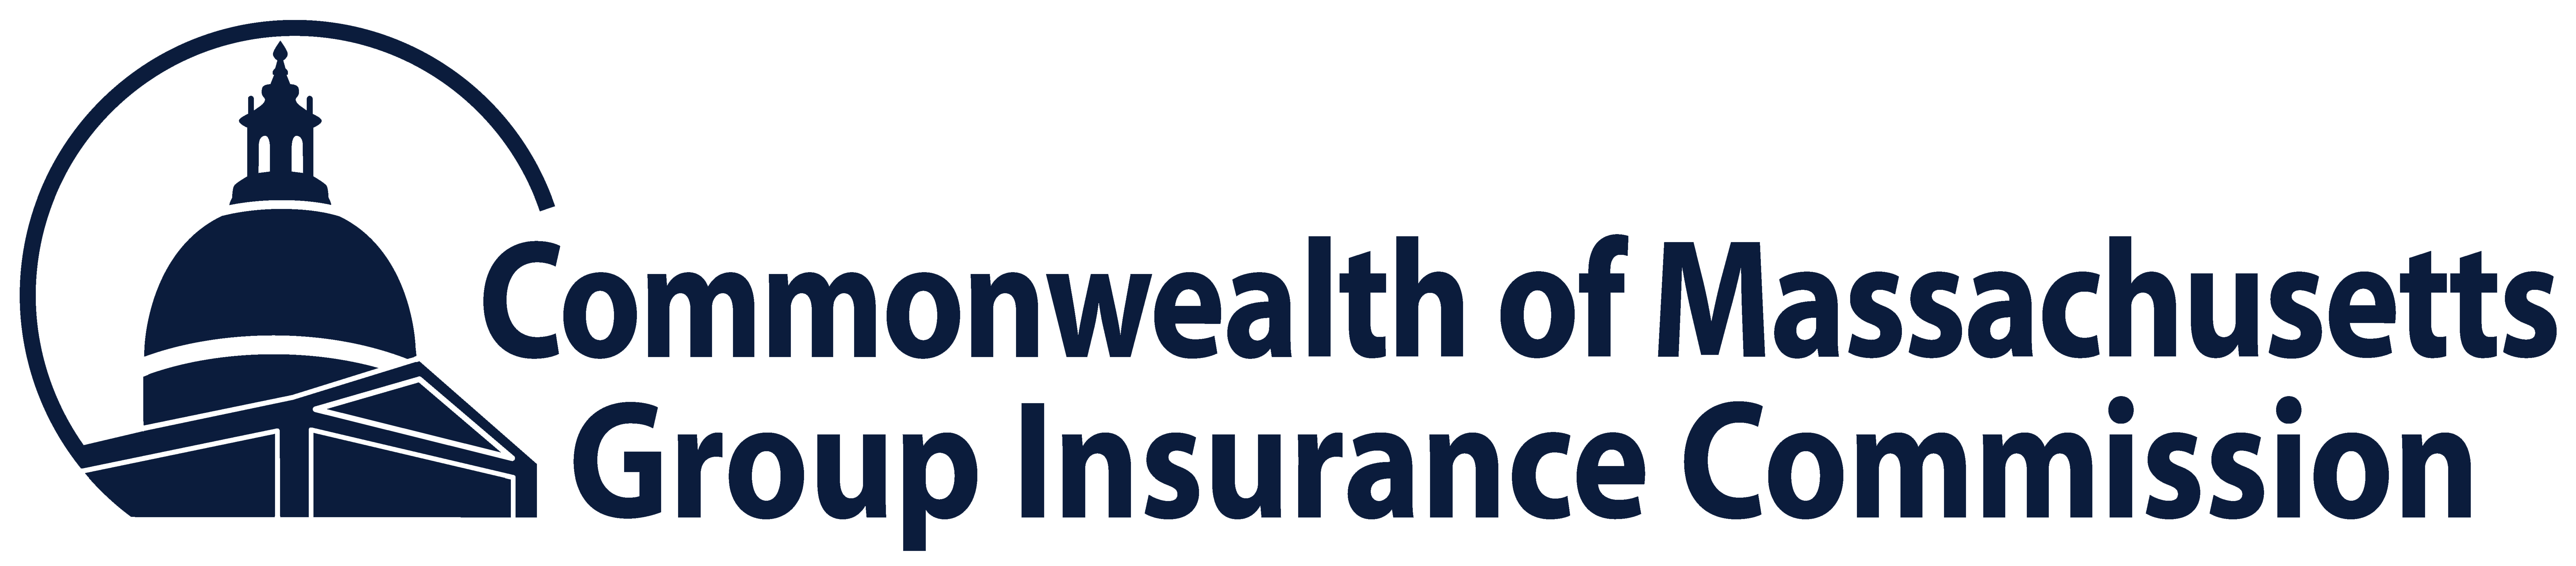 Commonwealth of Massachusetts Group Insurance Commission Logo